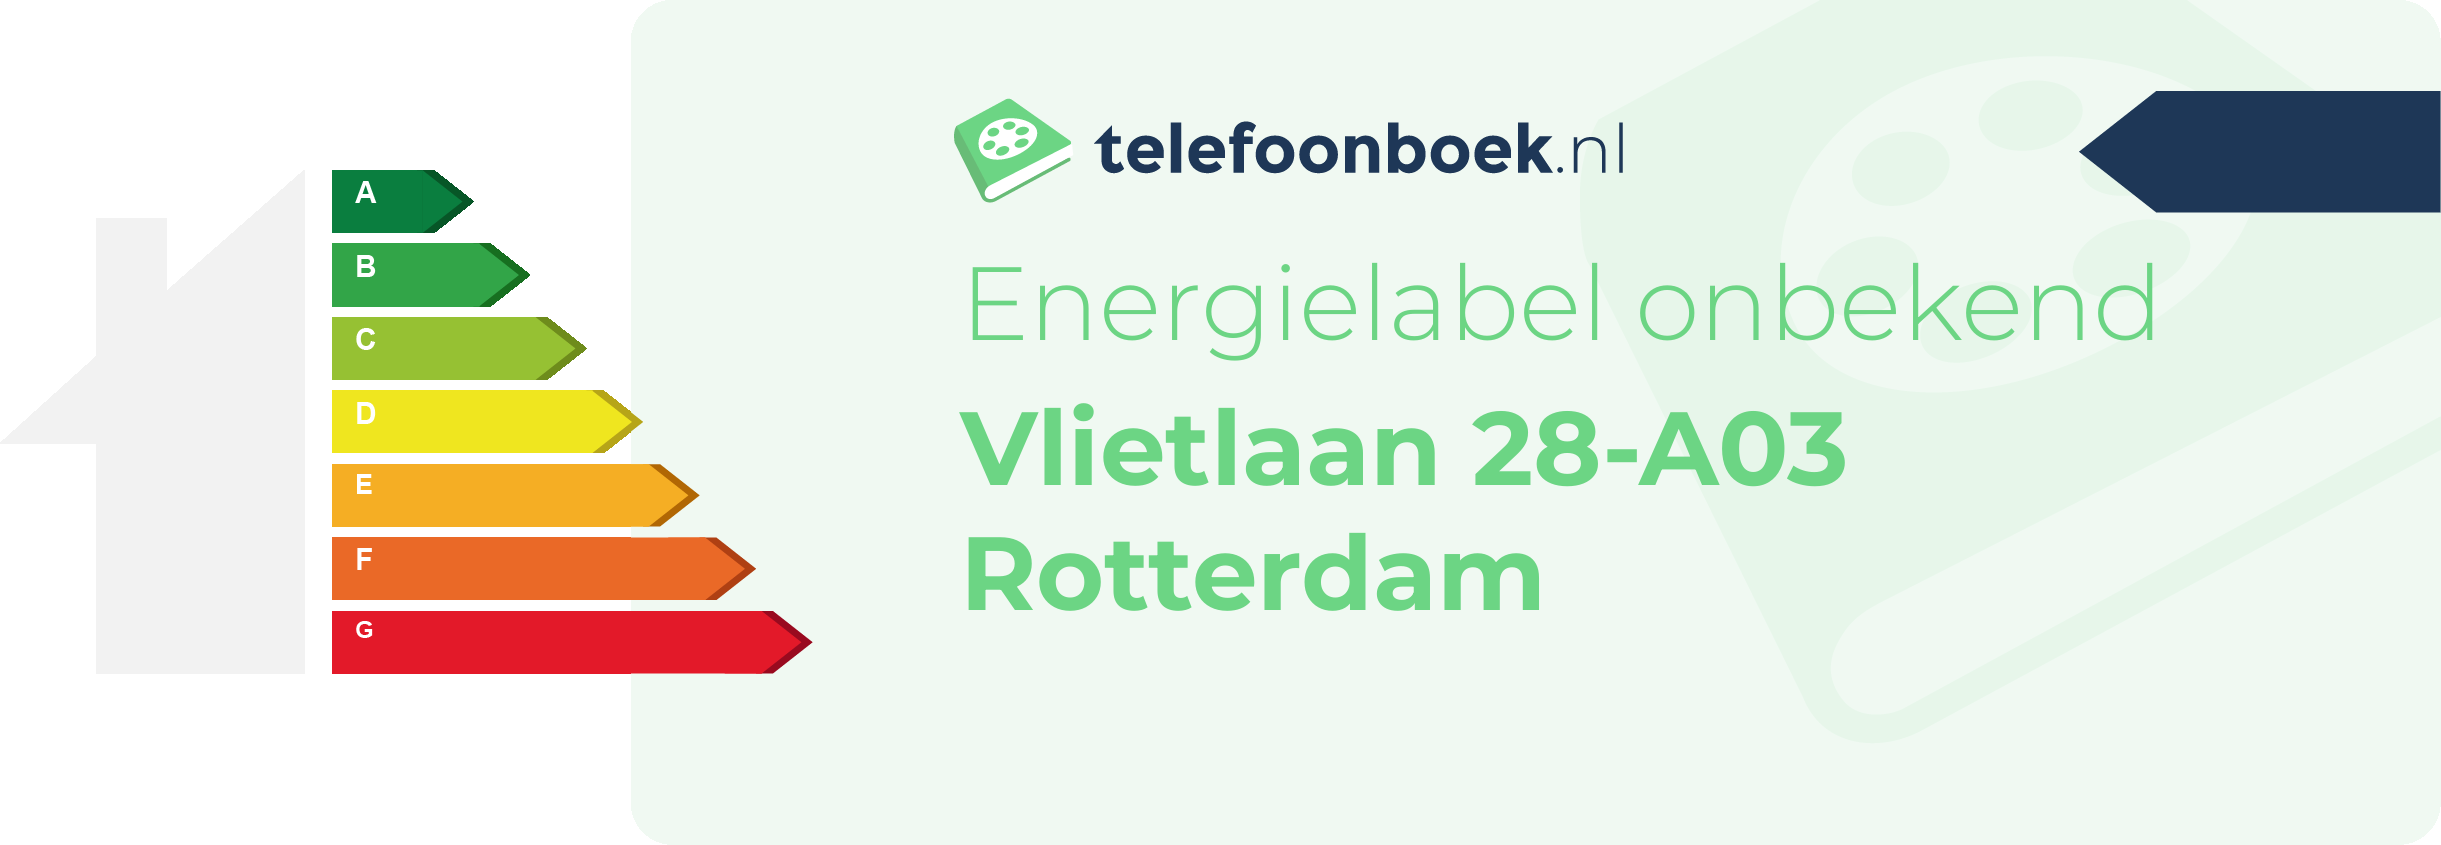 Energielabel Vlietlaan 28-A03 Rotterdam